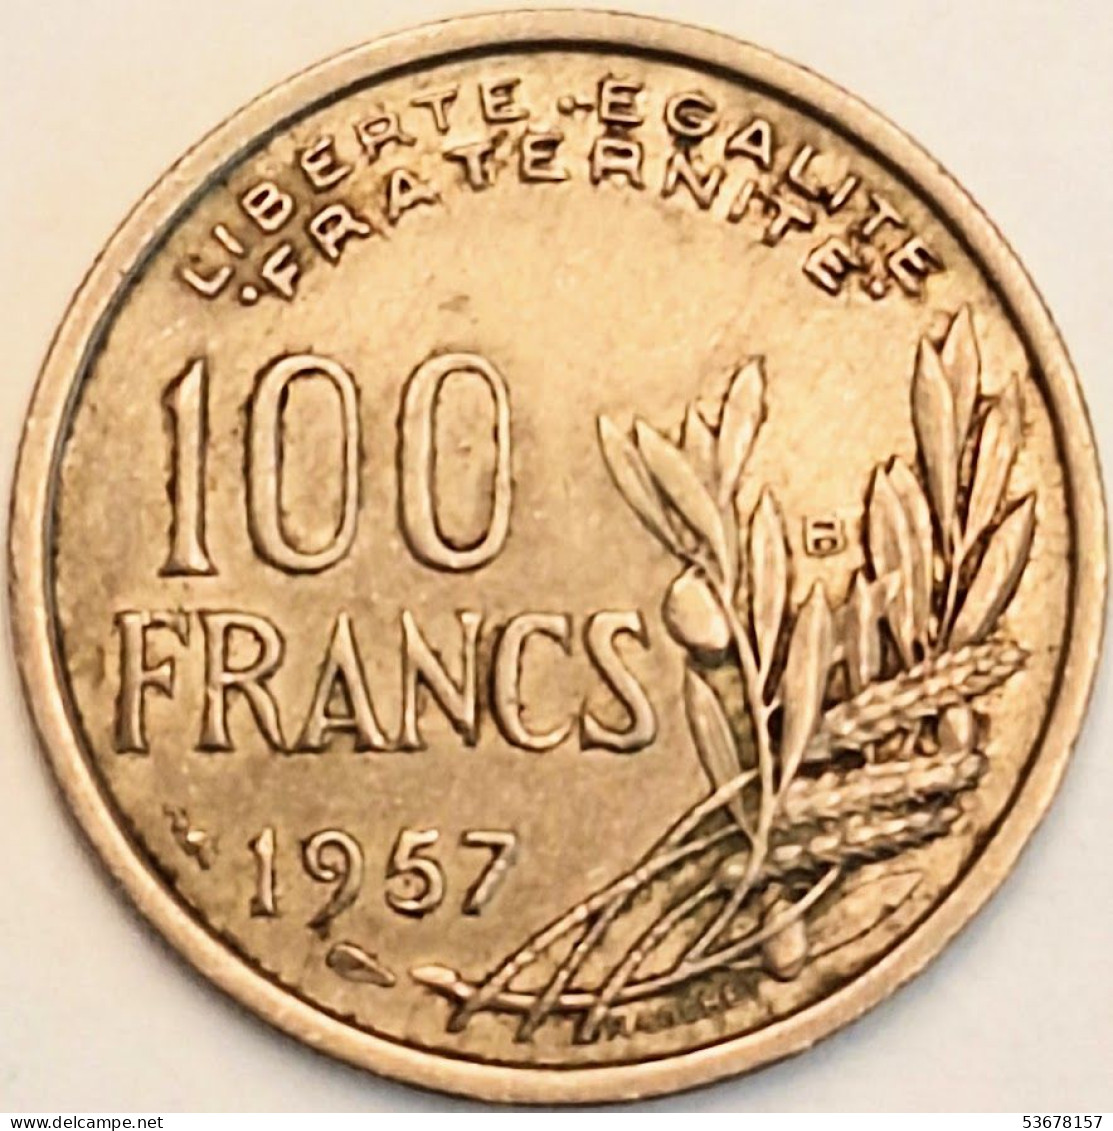 France - 100 Francs 1957 B, KM# 919.2 (#4170) - 100 Francs